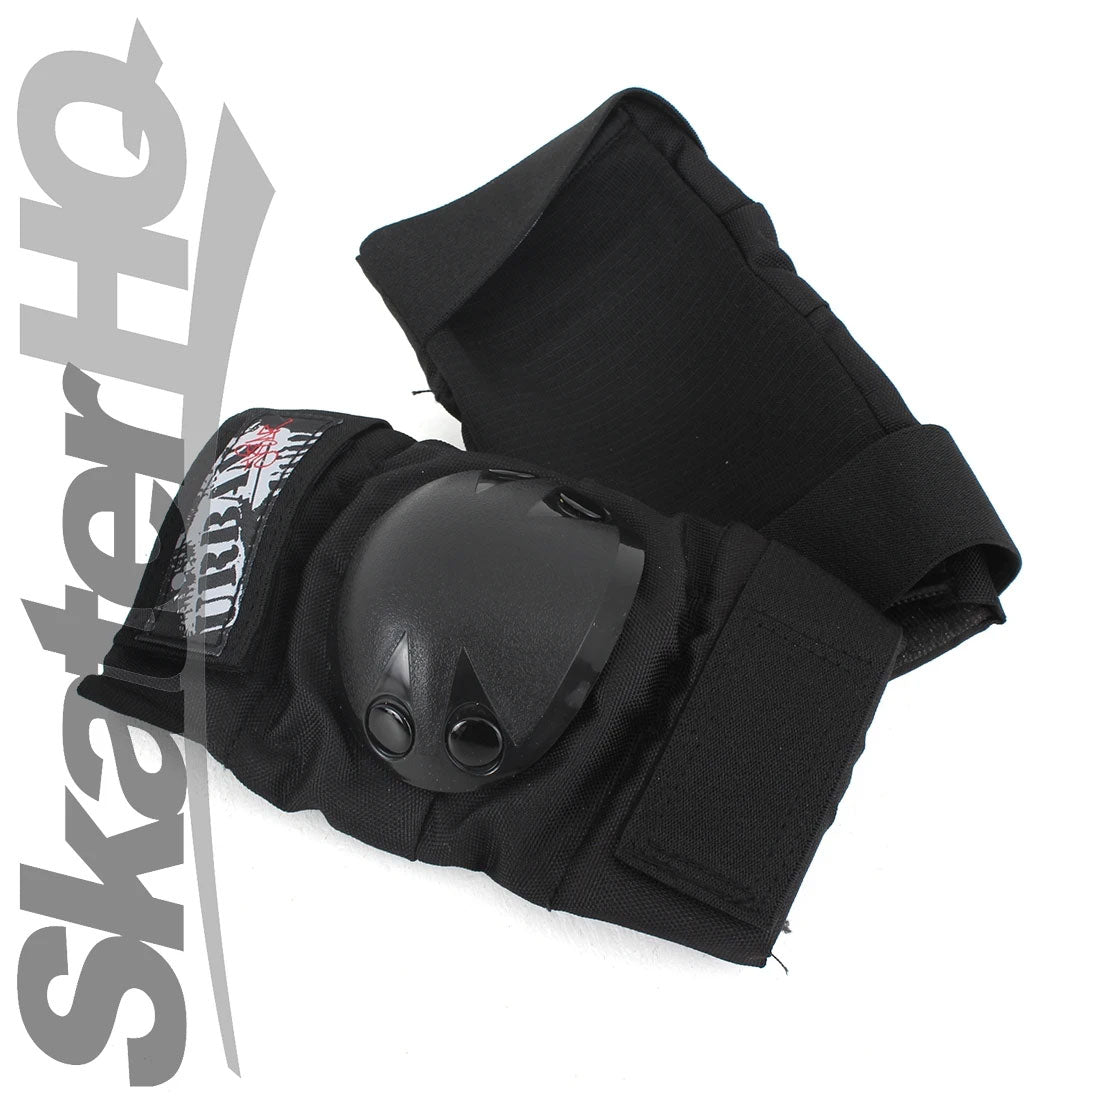 Urban Skater Knee/Elbow Black - Small Protective Gear